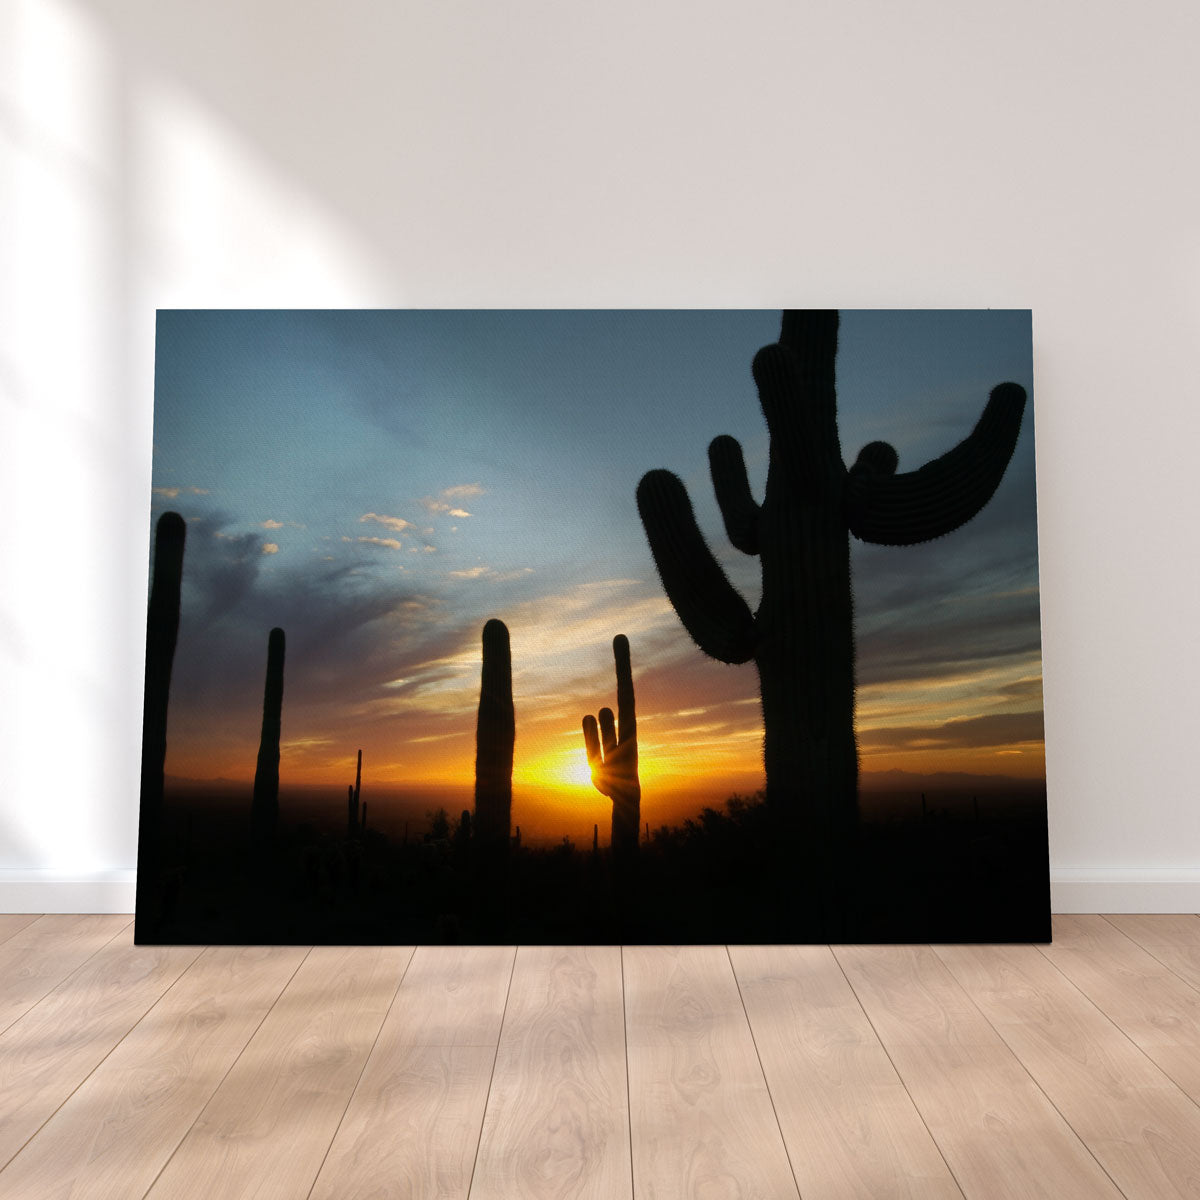 Sonoran Desert Sunset